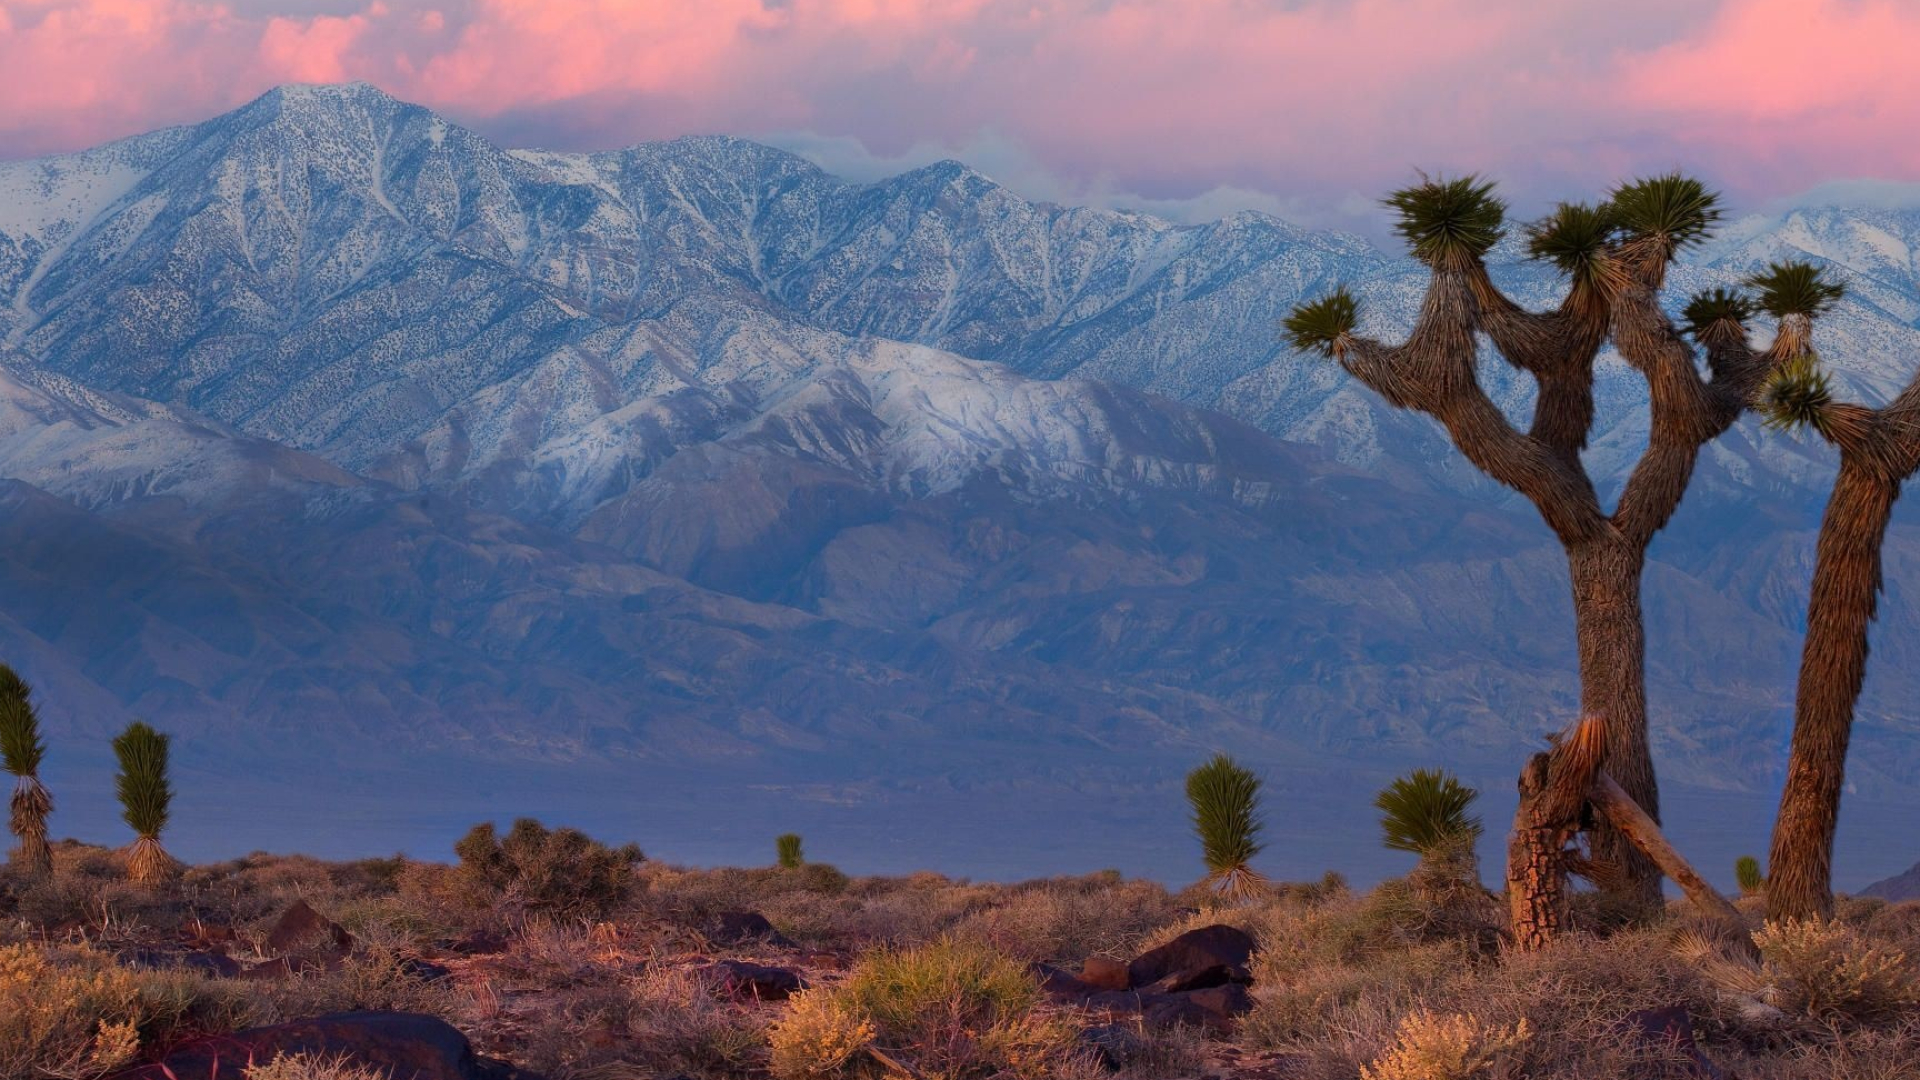 Death Valley National Park, Nature wallpaper, Landscape photography, Free HD download, 1920x1080 Full HD Desktop